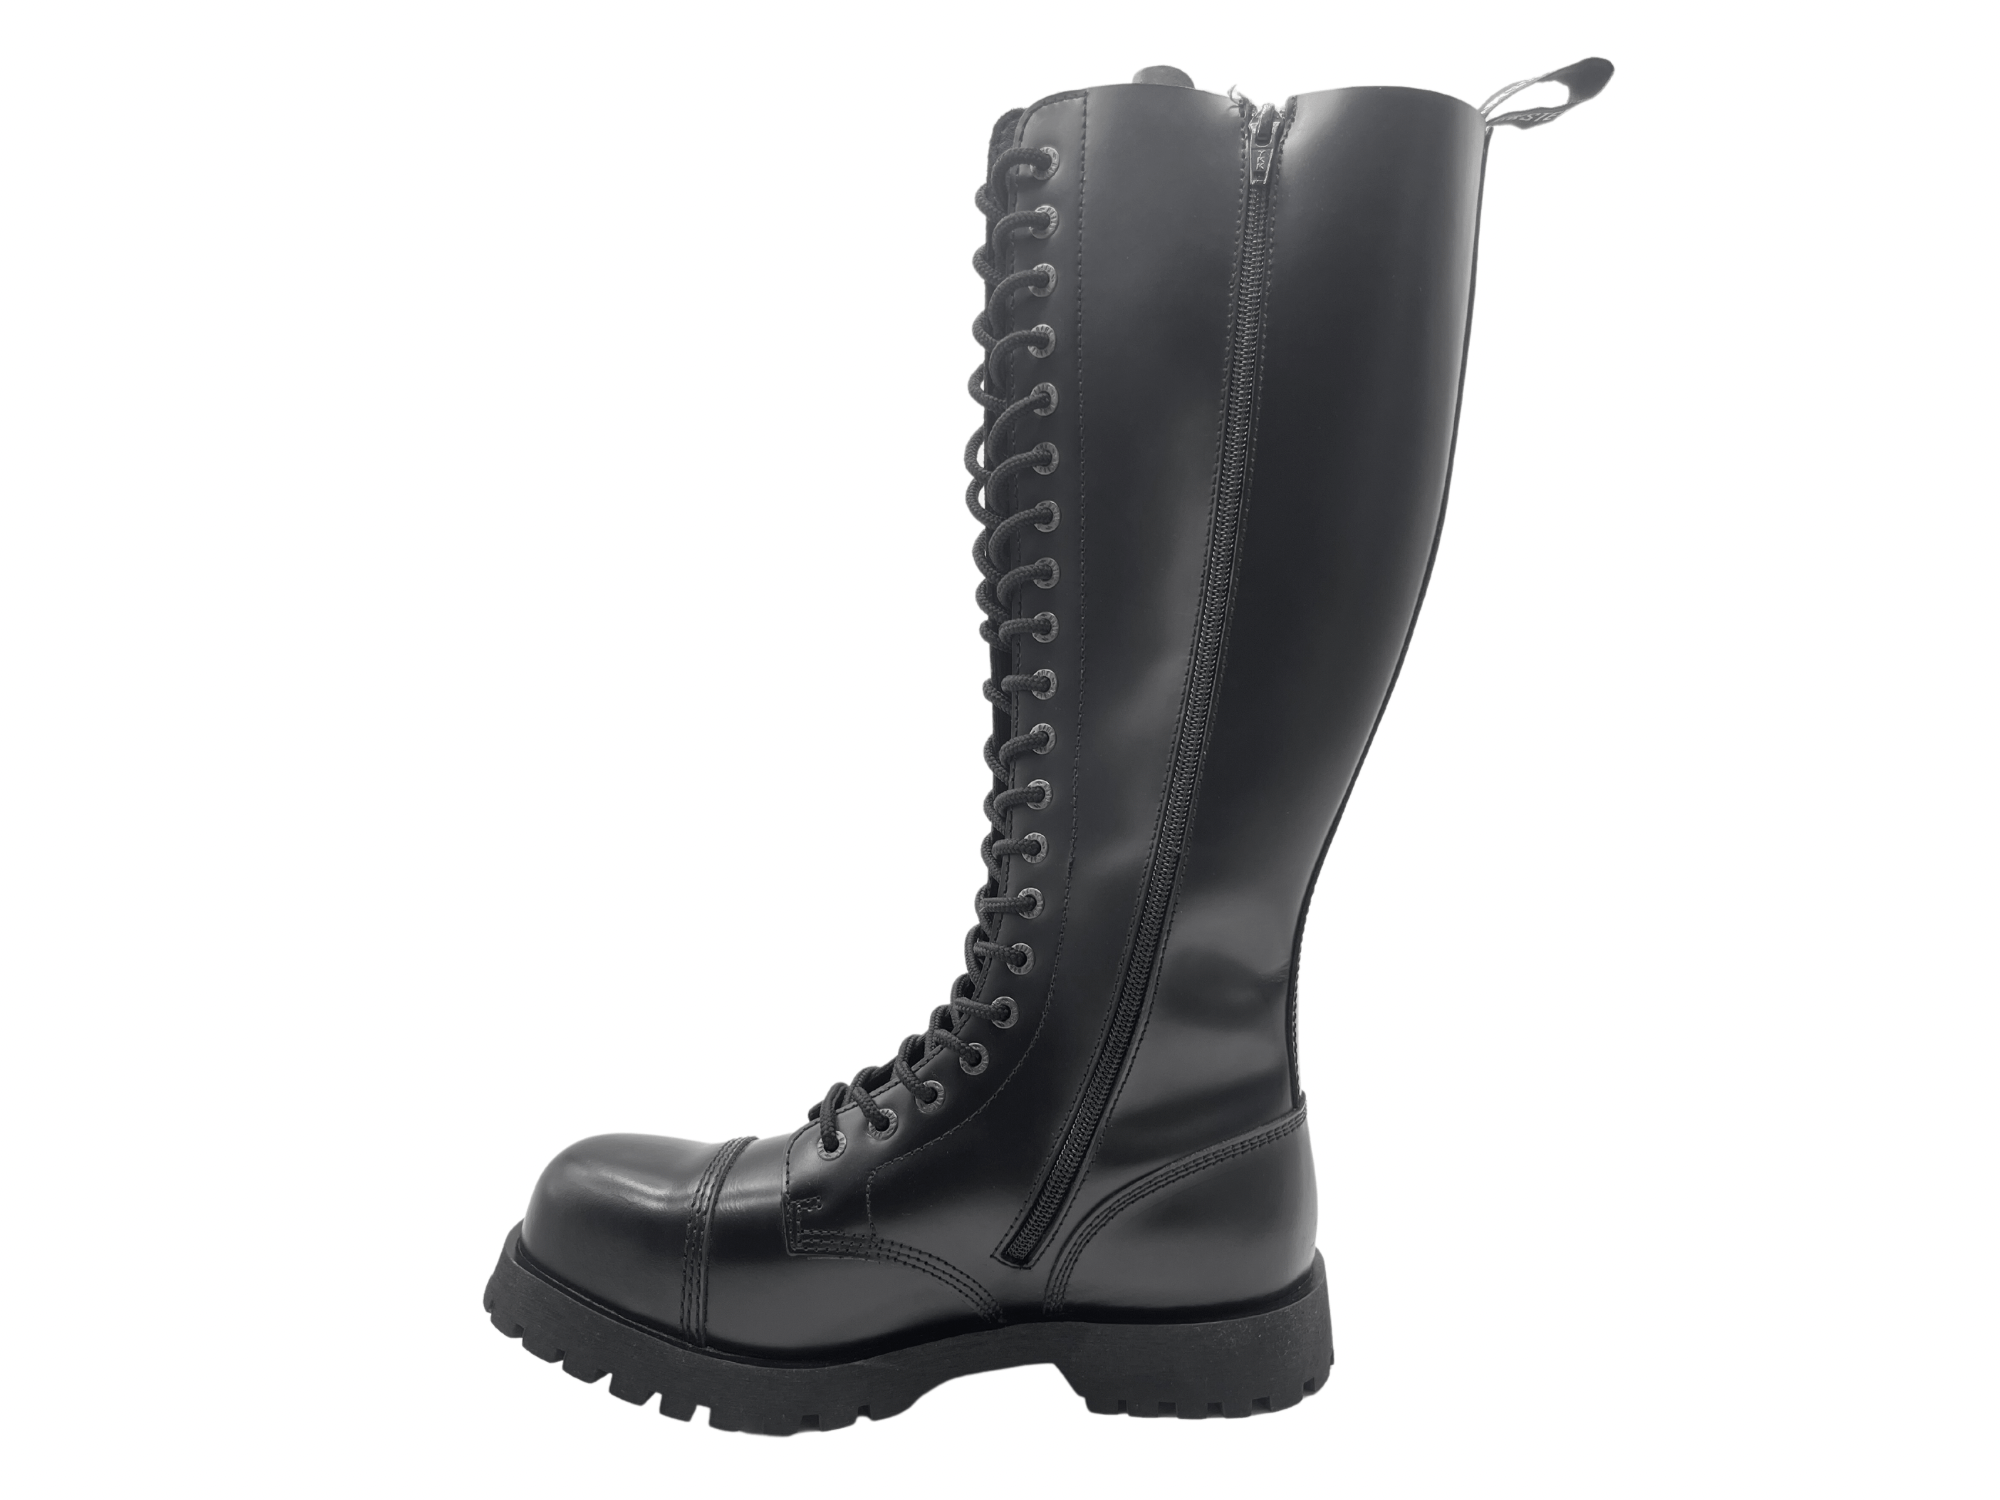 Darksteyn Shoes 20 Eye Ranger Premium Boots Black Boots